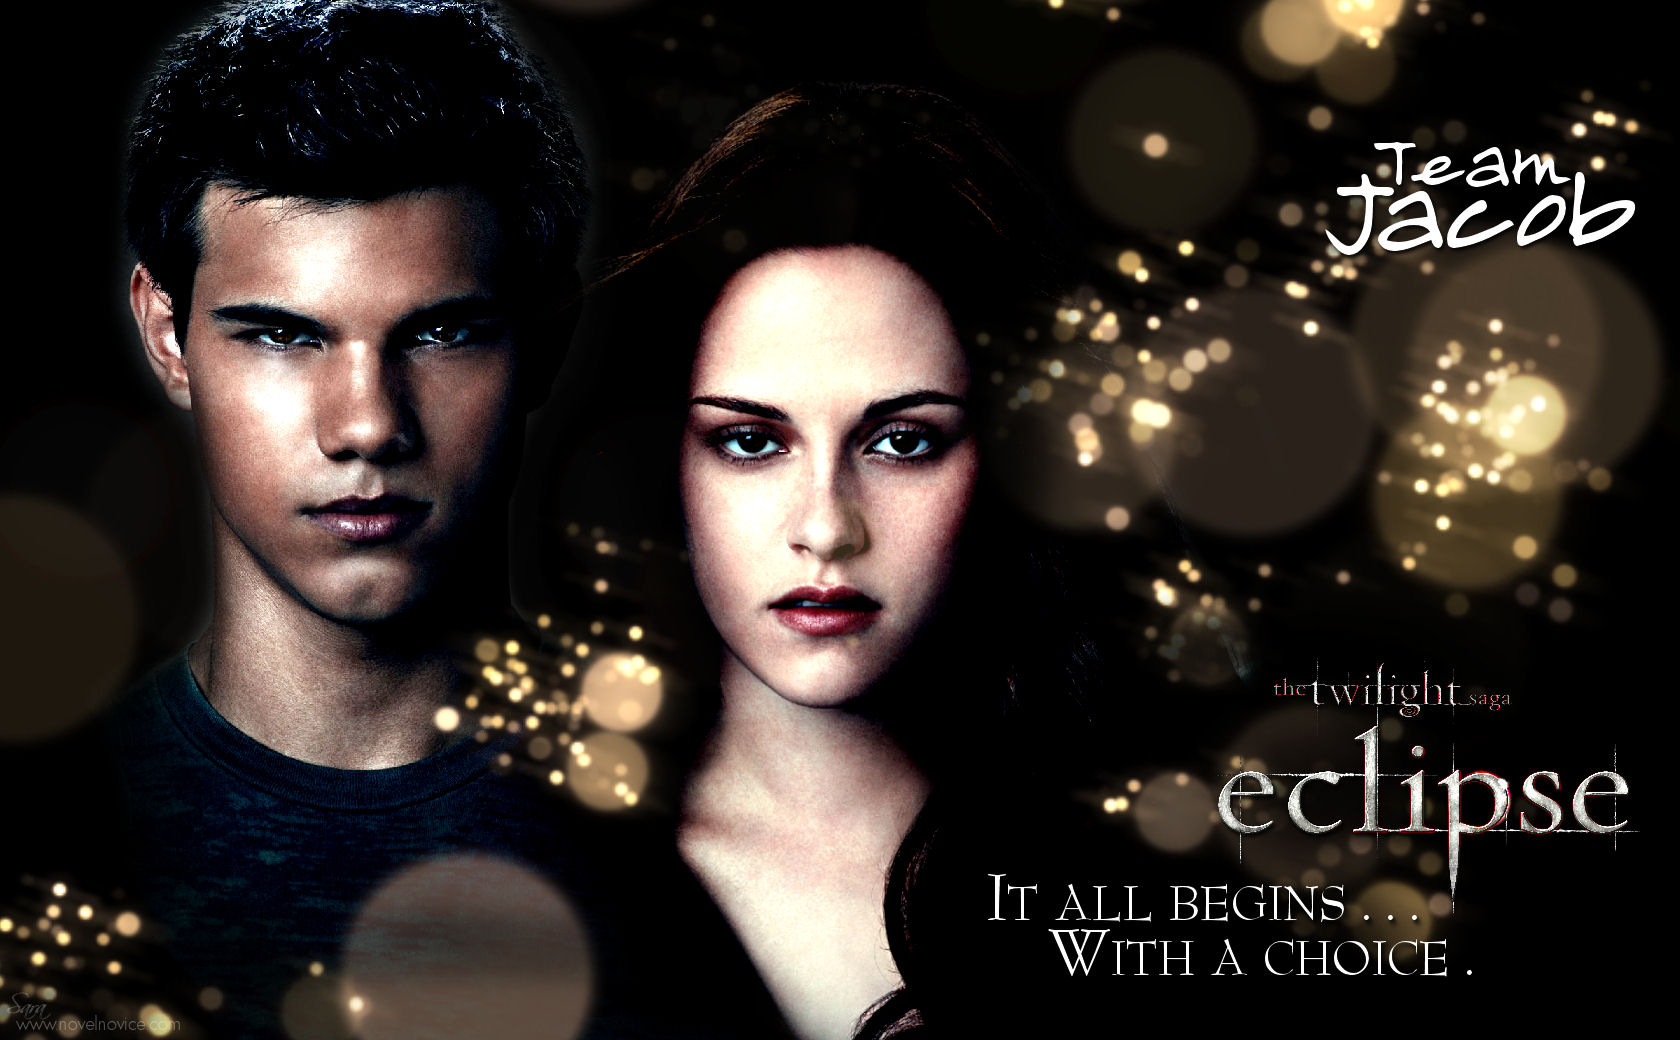 More Desktop Wallpaper For The Twilight Saga Eclipse